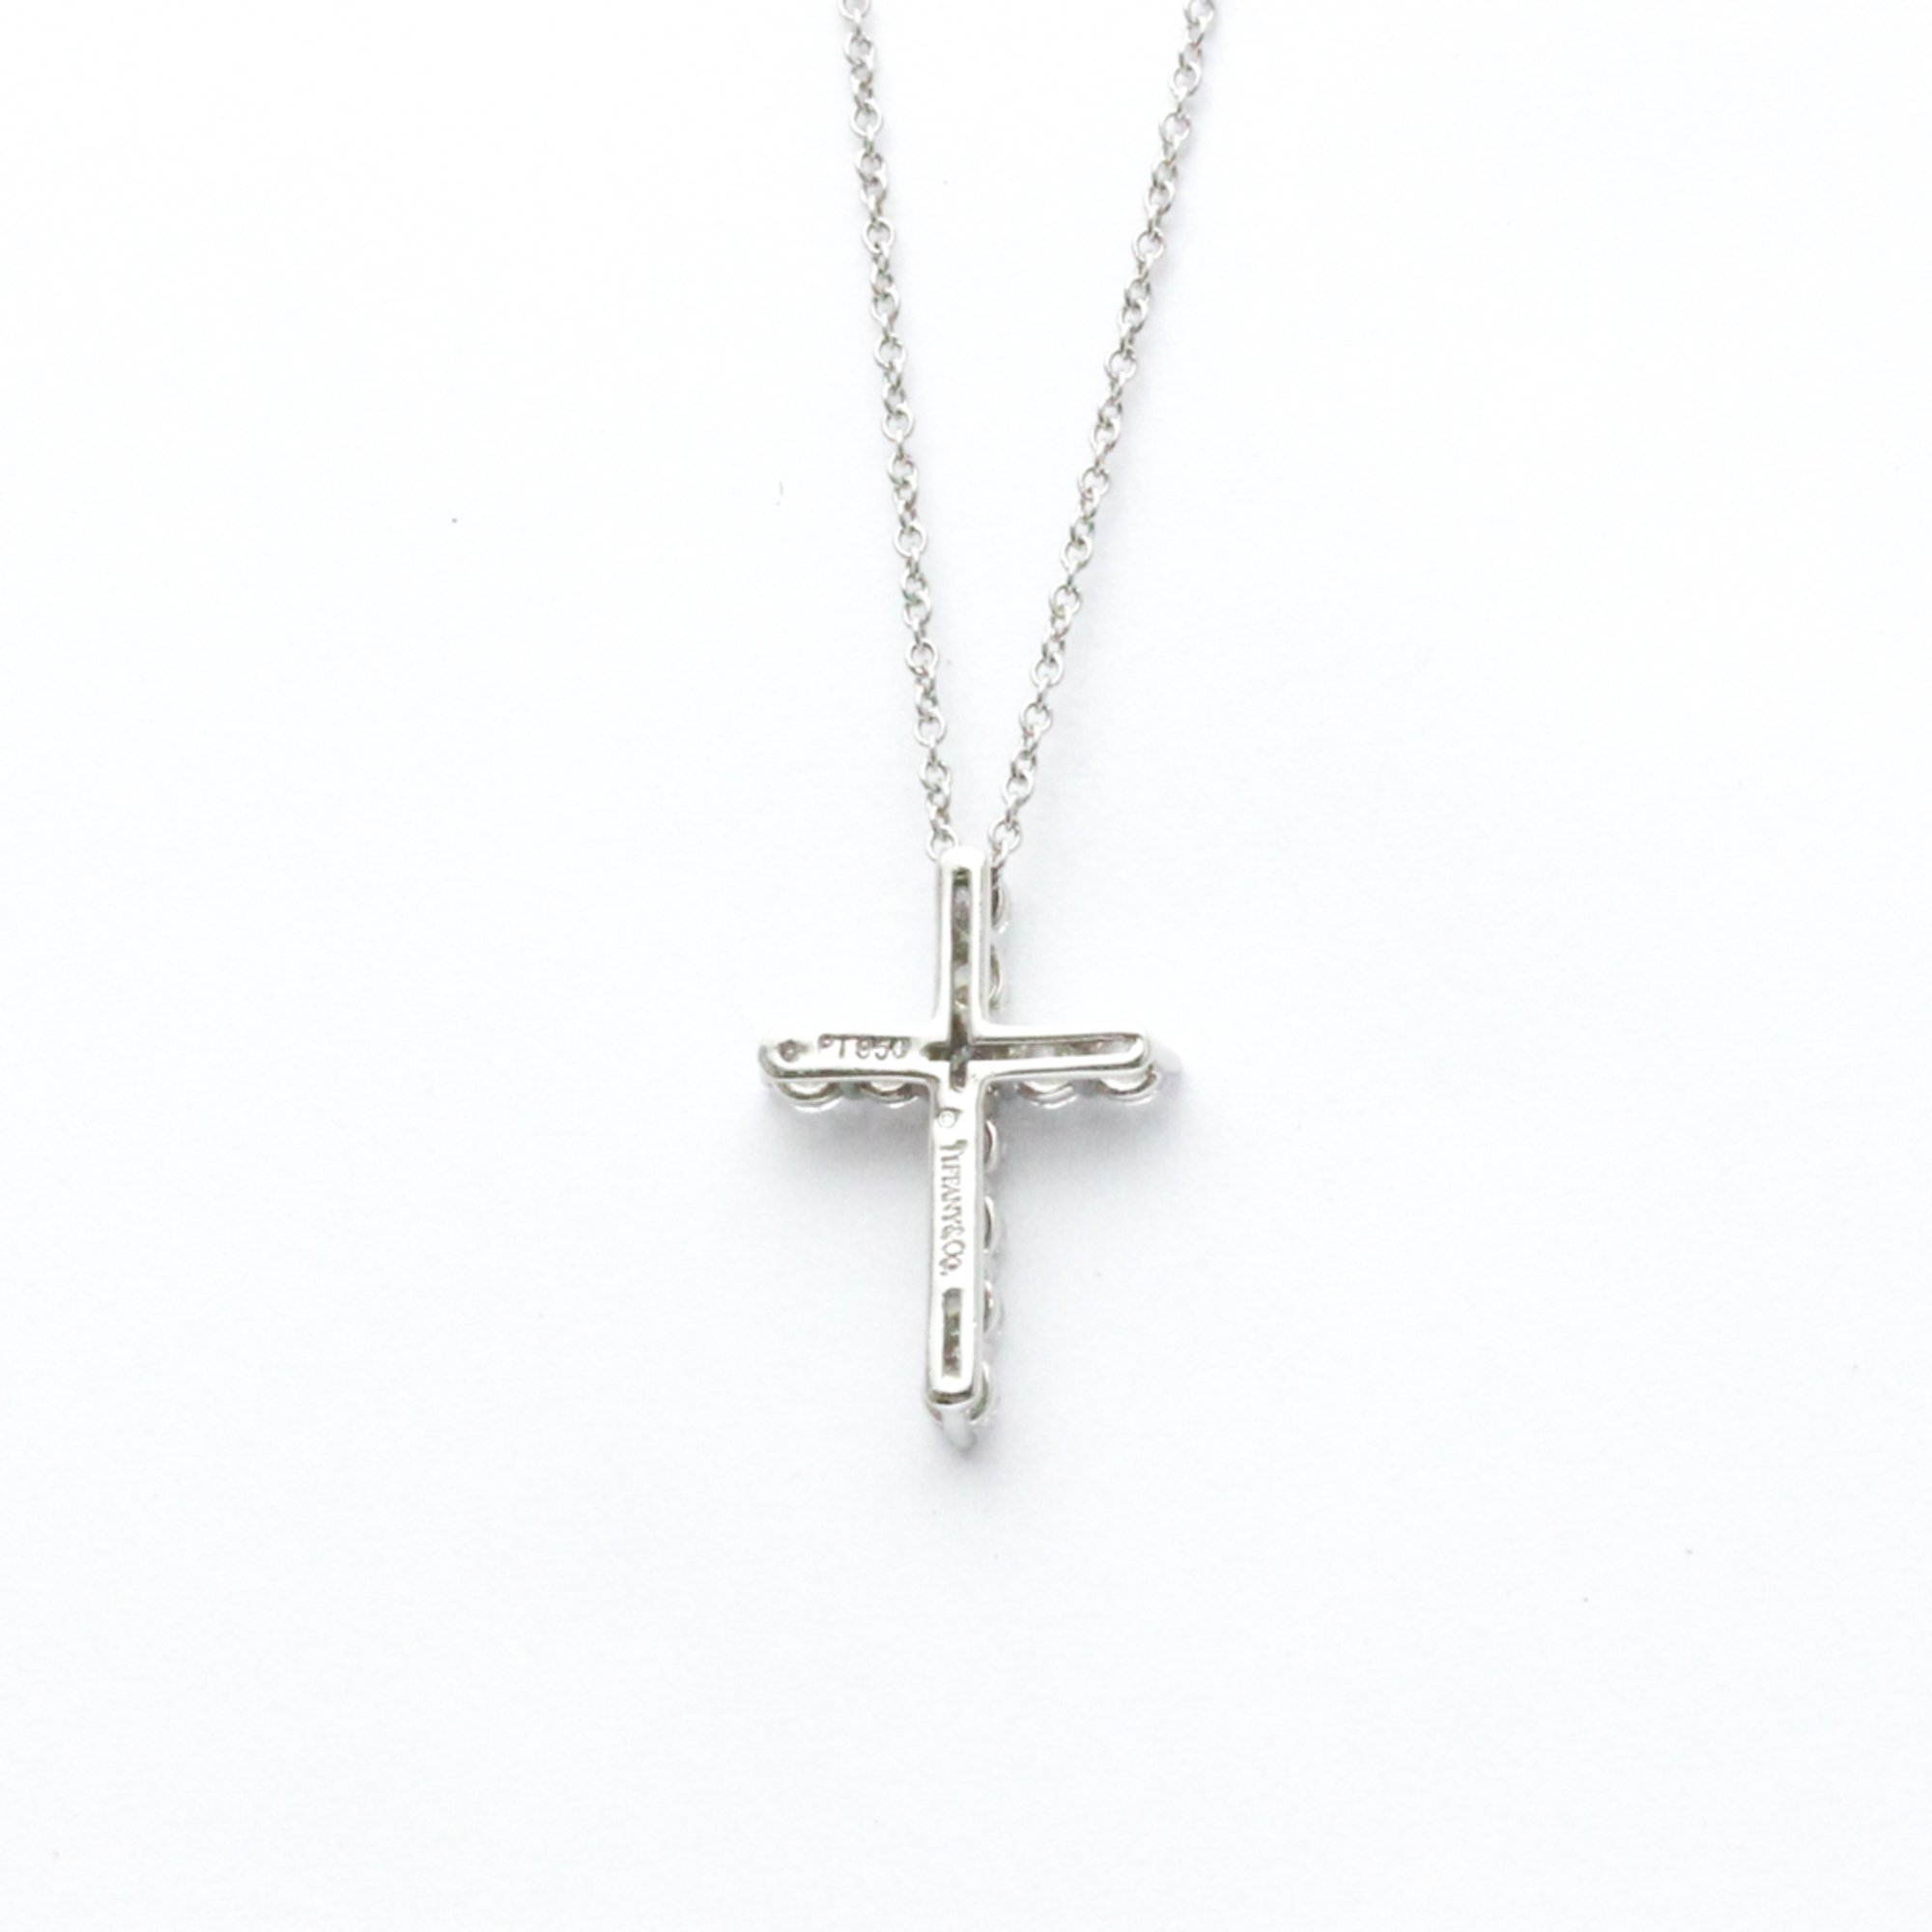 Tiffany Small Cross Necklace Platinum Diamond Men,Women Fashion Pendant Necklace (Silver)